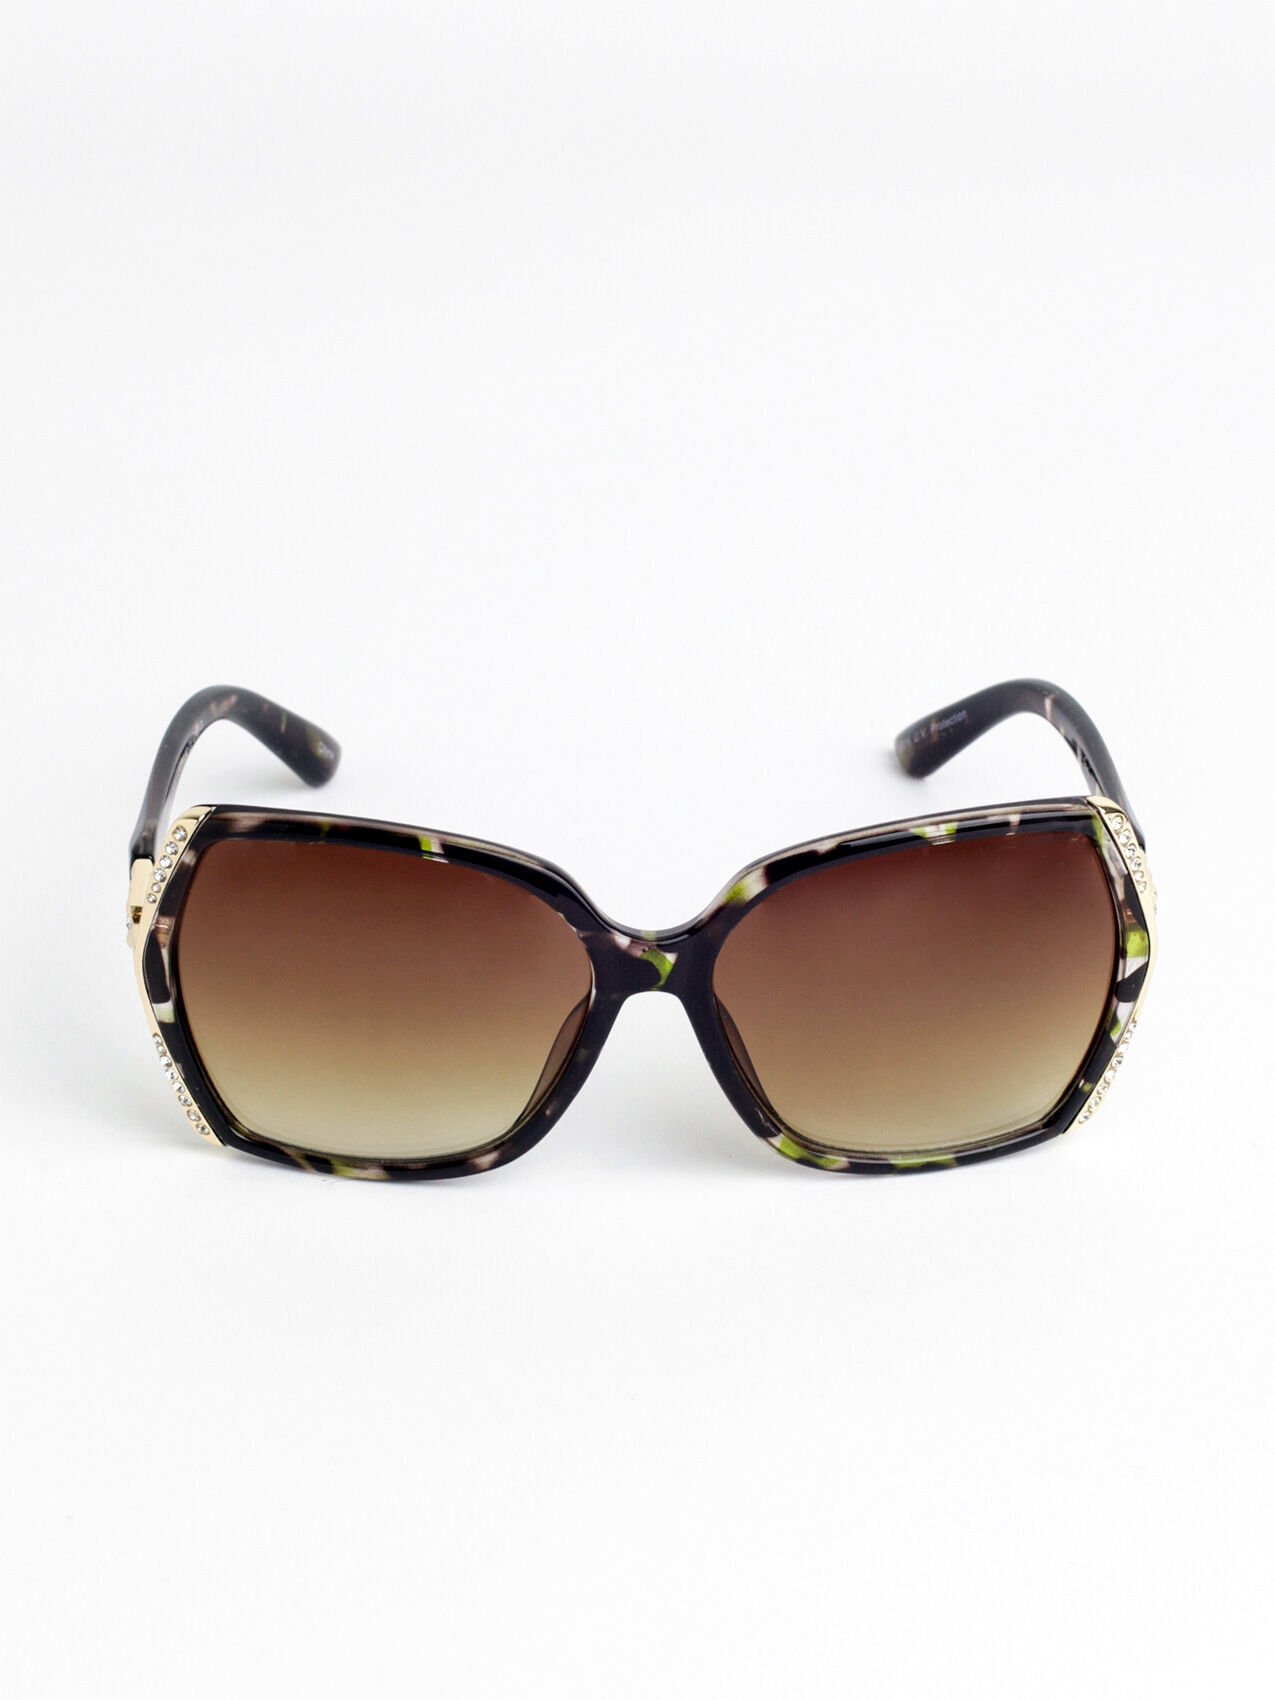 Square Tortoise Sunglasses with Rhinestone Frames